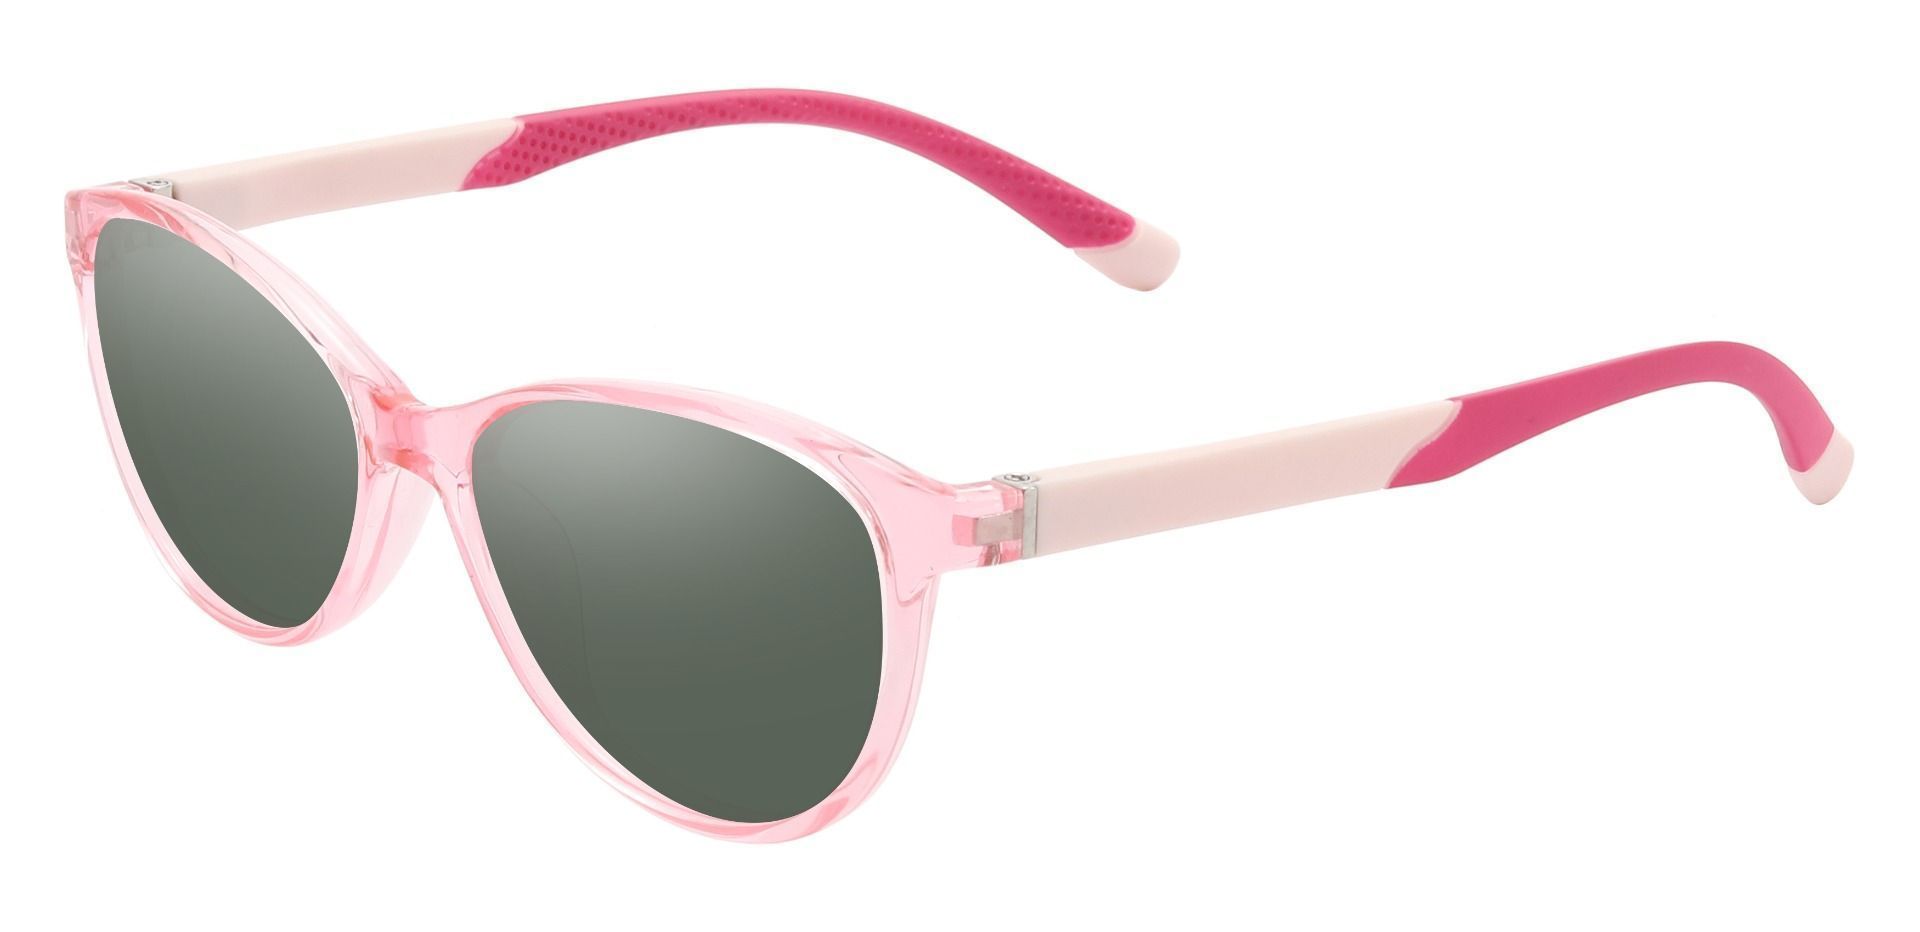 Mildred Cat Eye Prescription Sunglasses - Pink Frame With Green Lenses